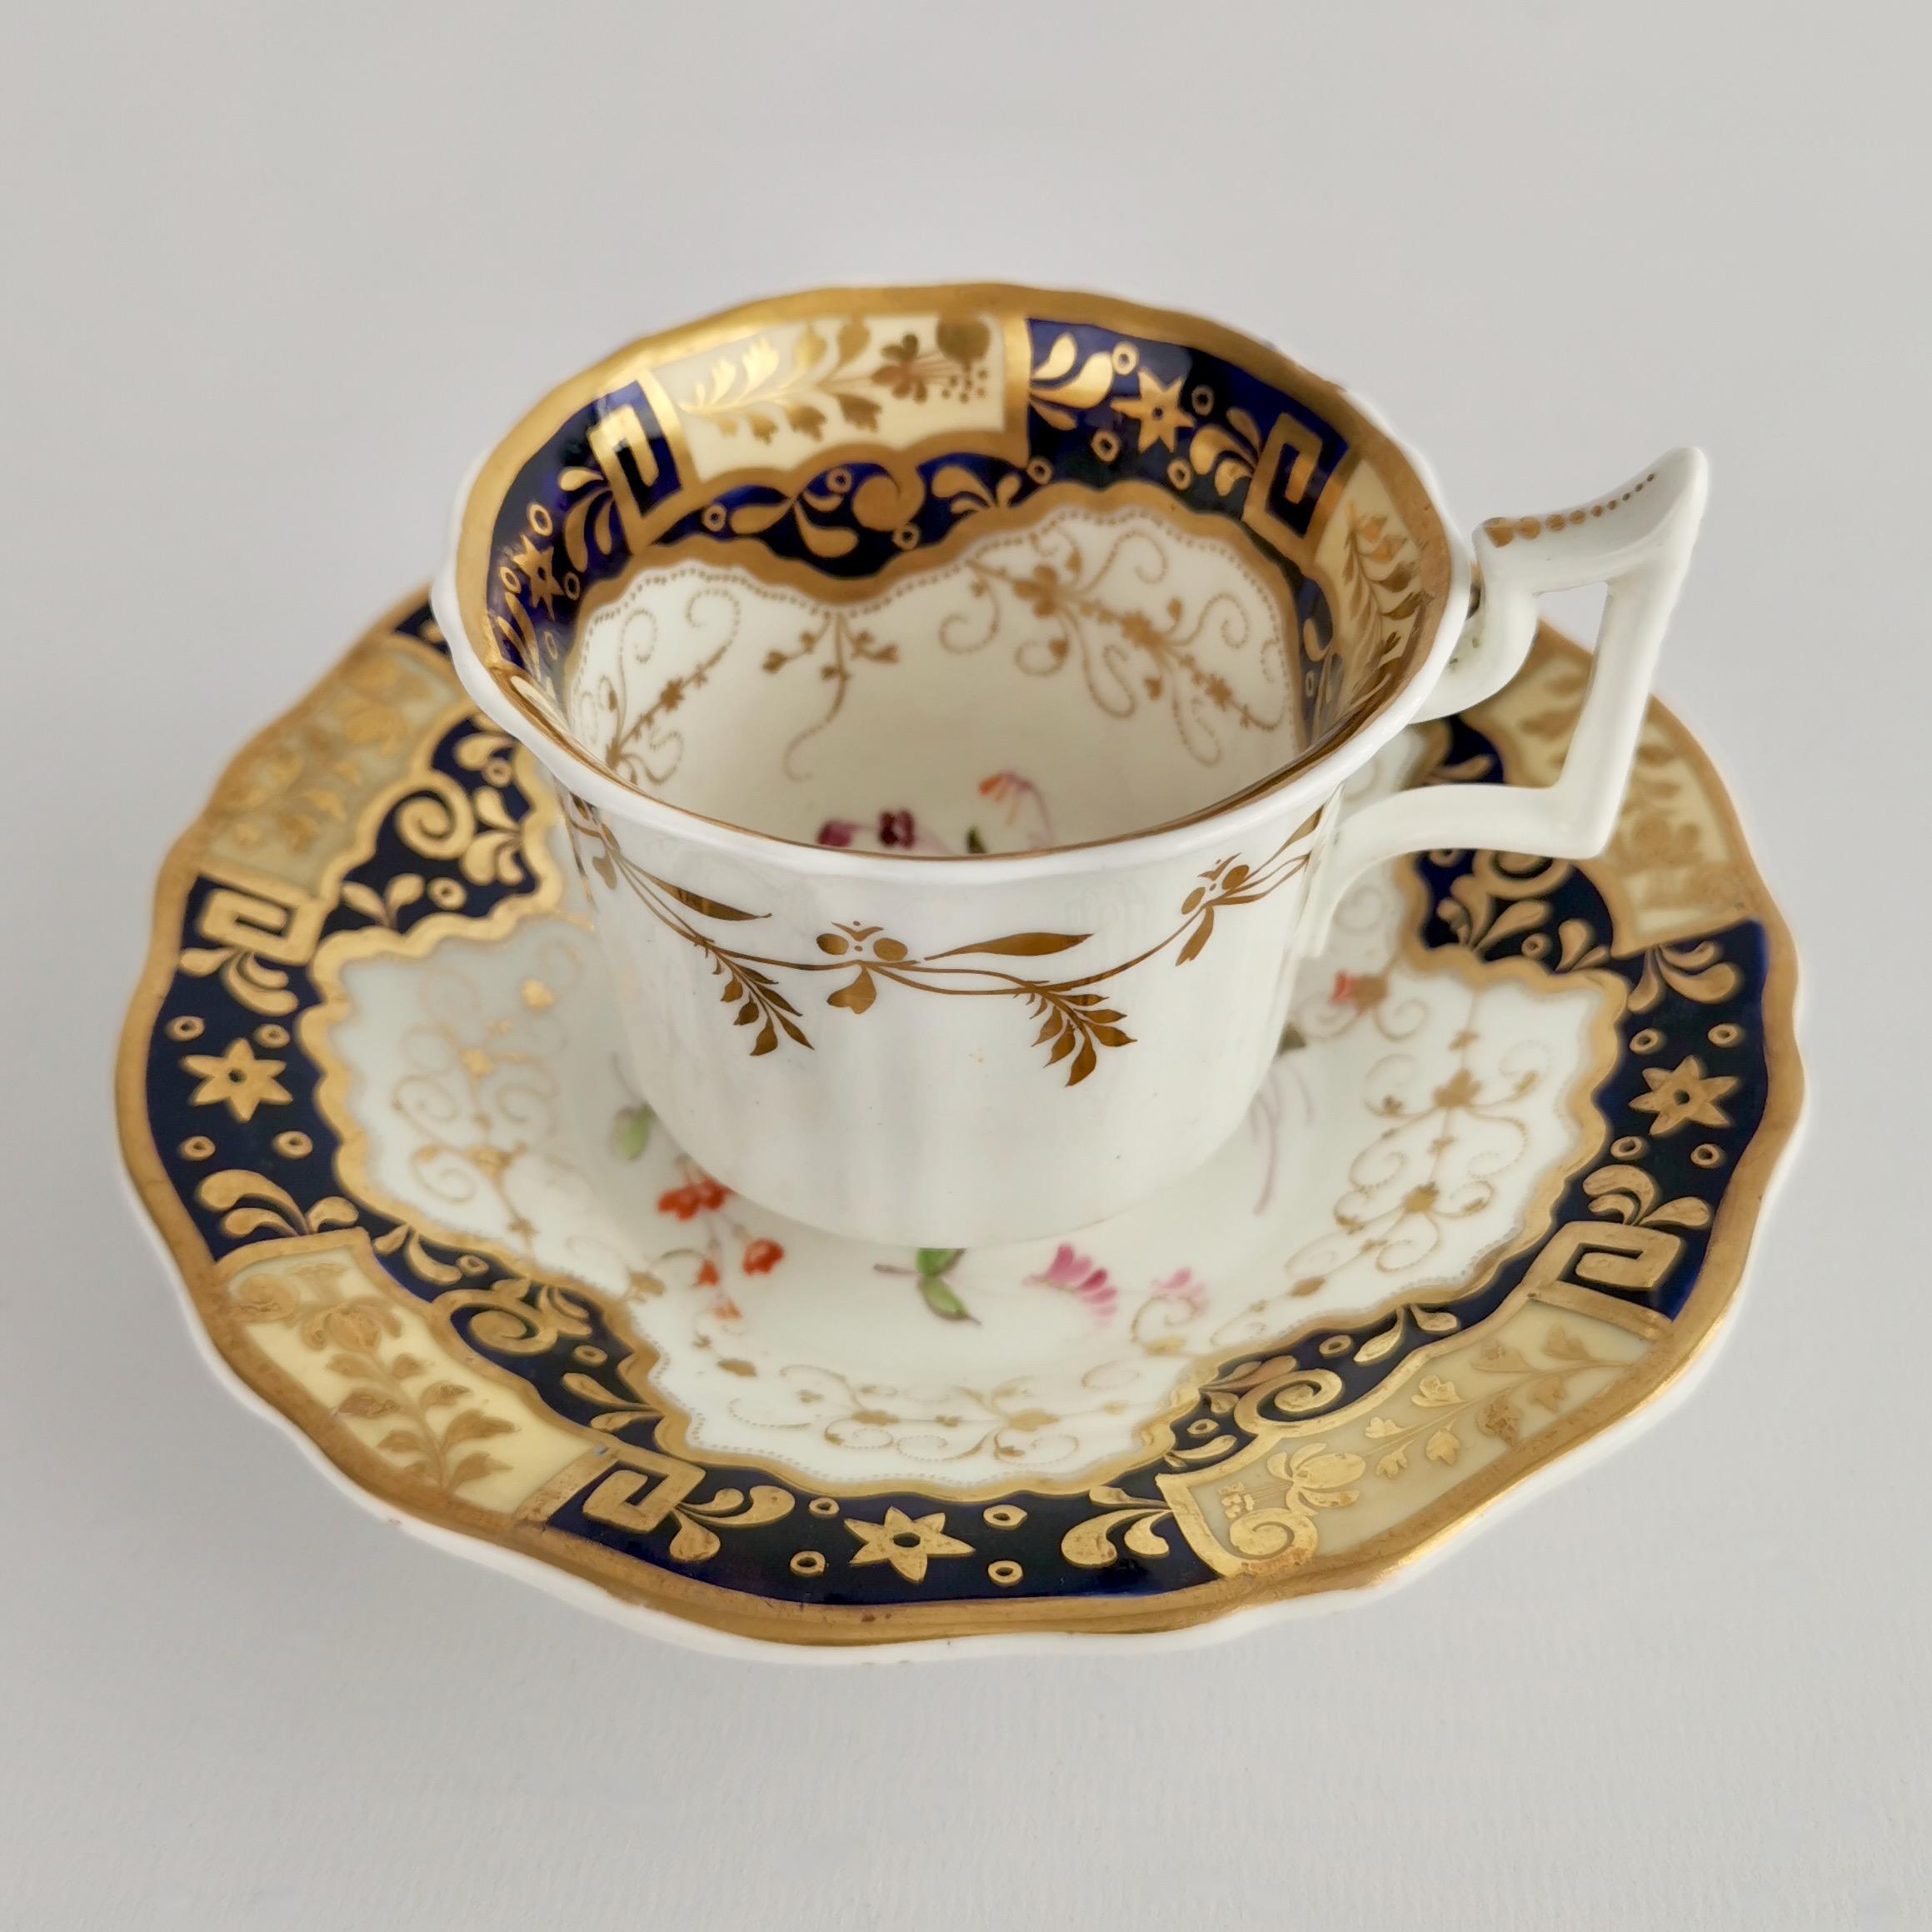 Hand-Painted Yates Porcelain Teacup Trio, Cobalt Blue, Gilt and Flowers, Regency, ca 1825